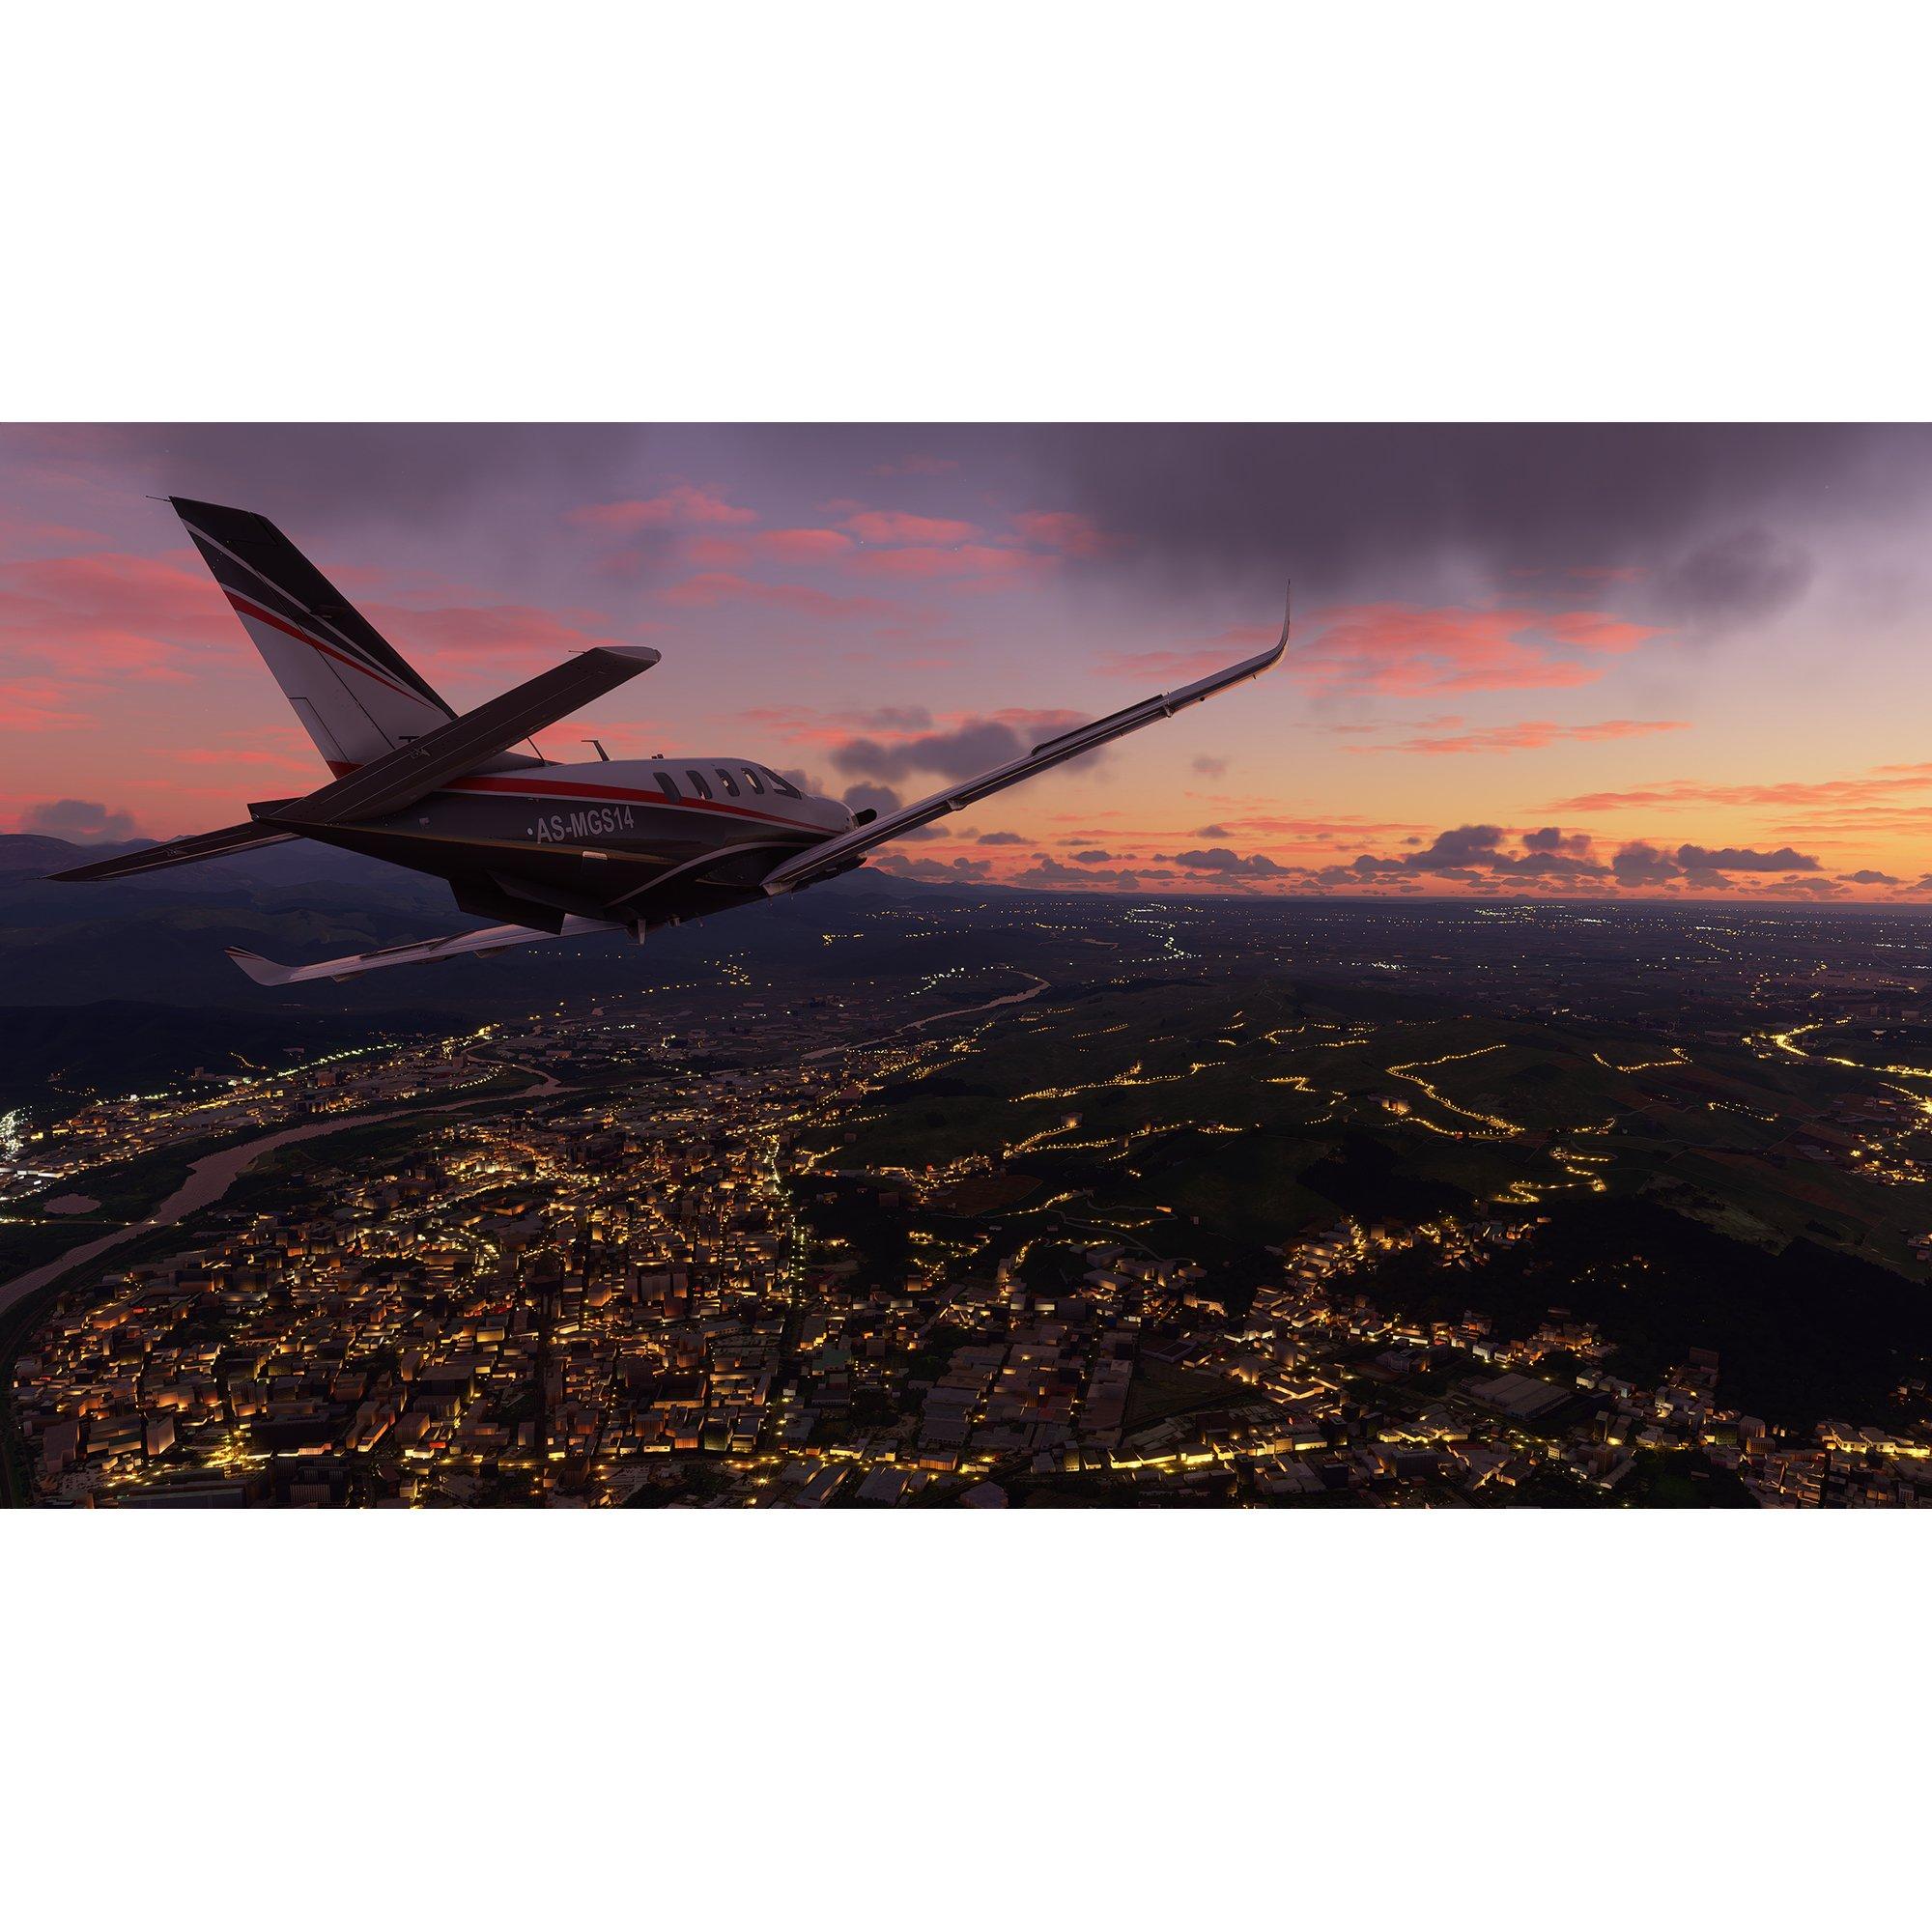 Buy Pro Flight Simulator - Microsoft Store en-MS